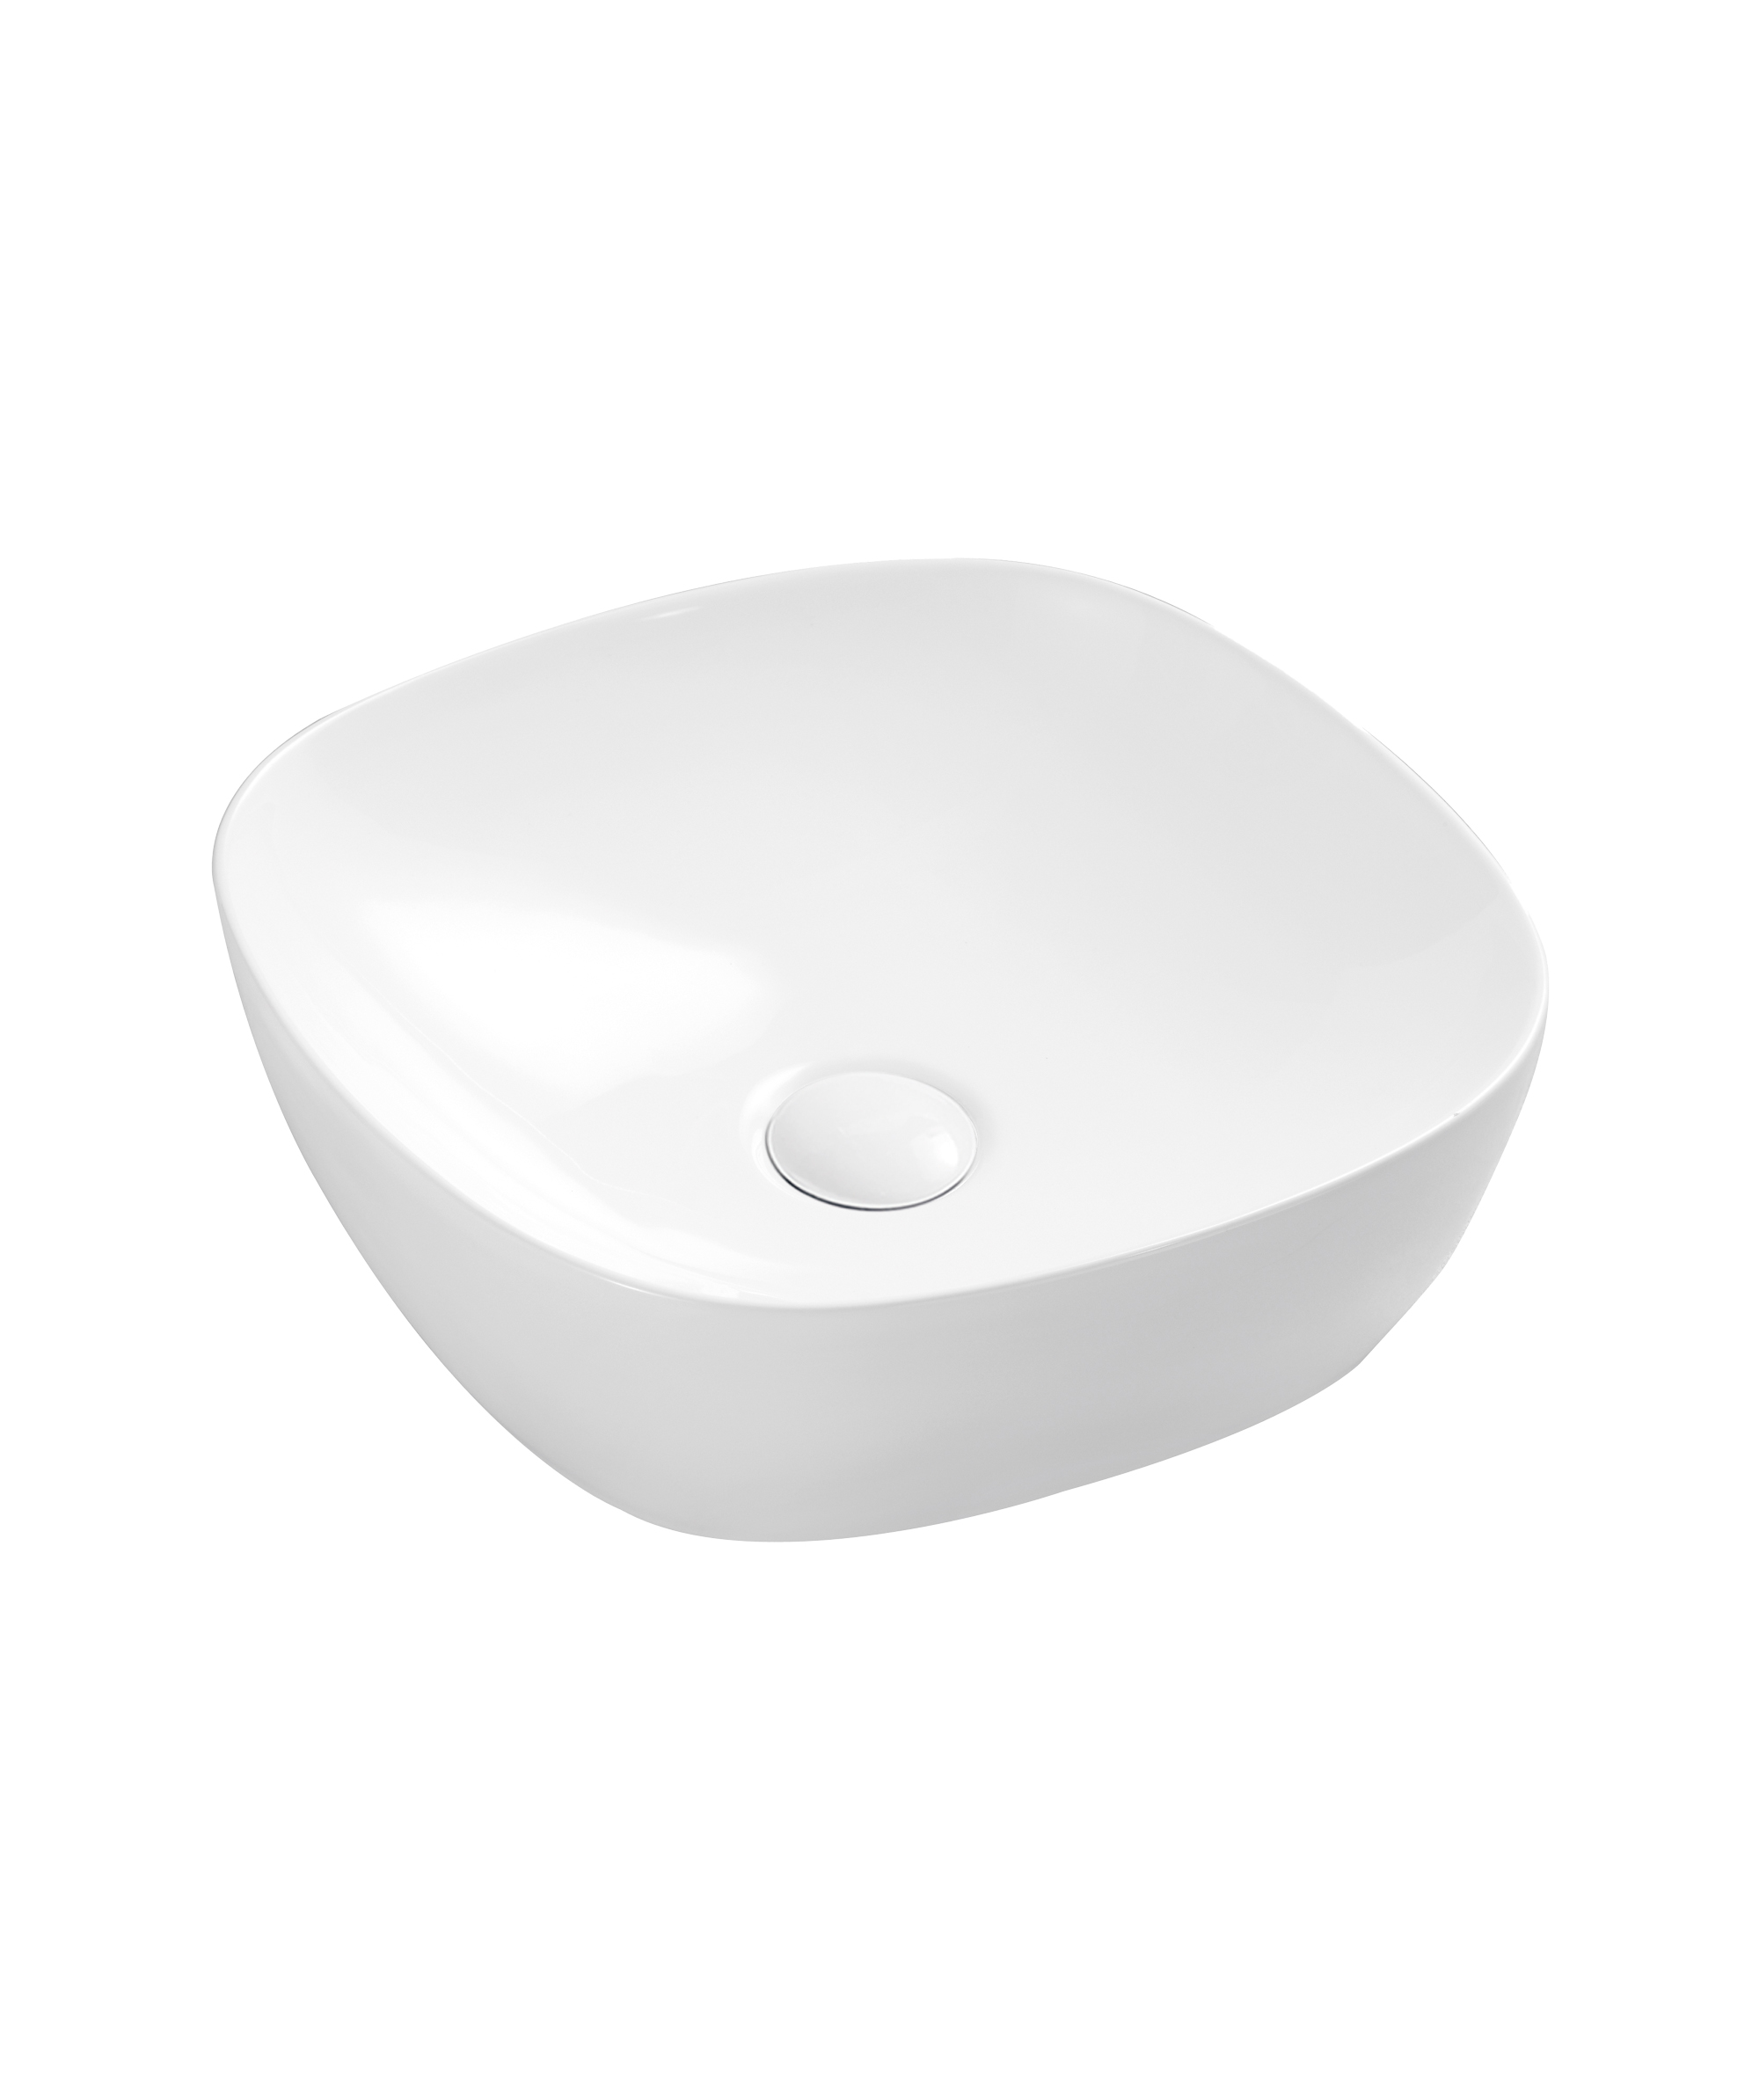 Limni 370 ceramic basin - White Gloss